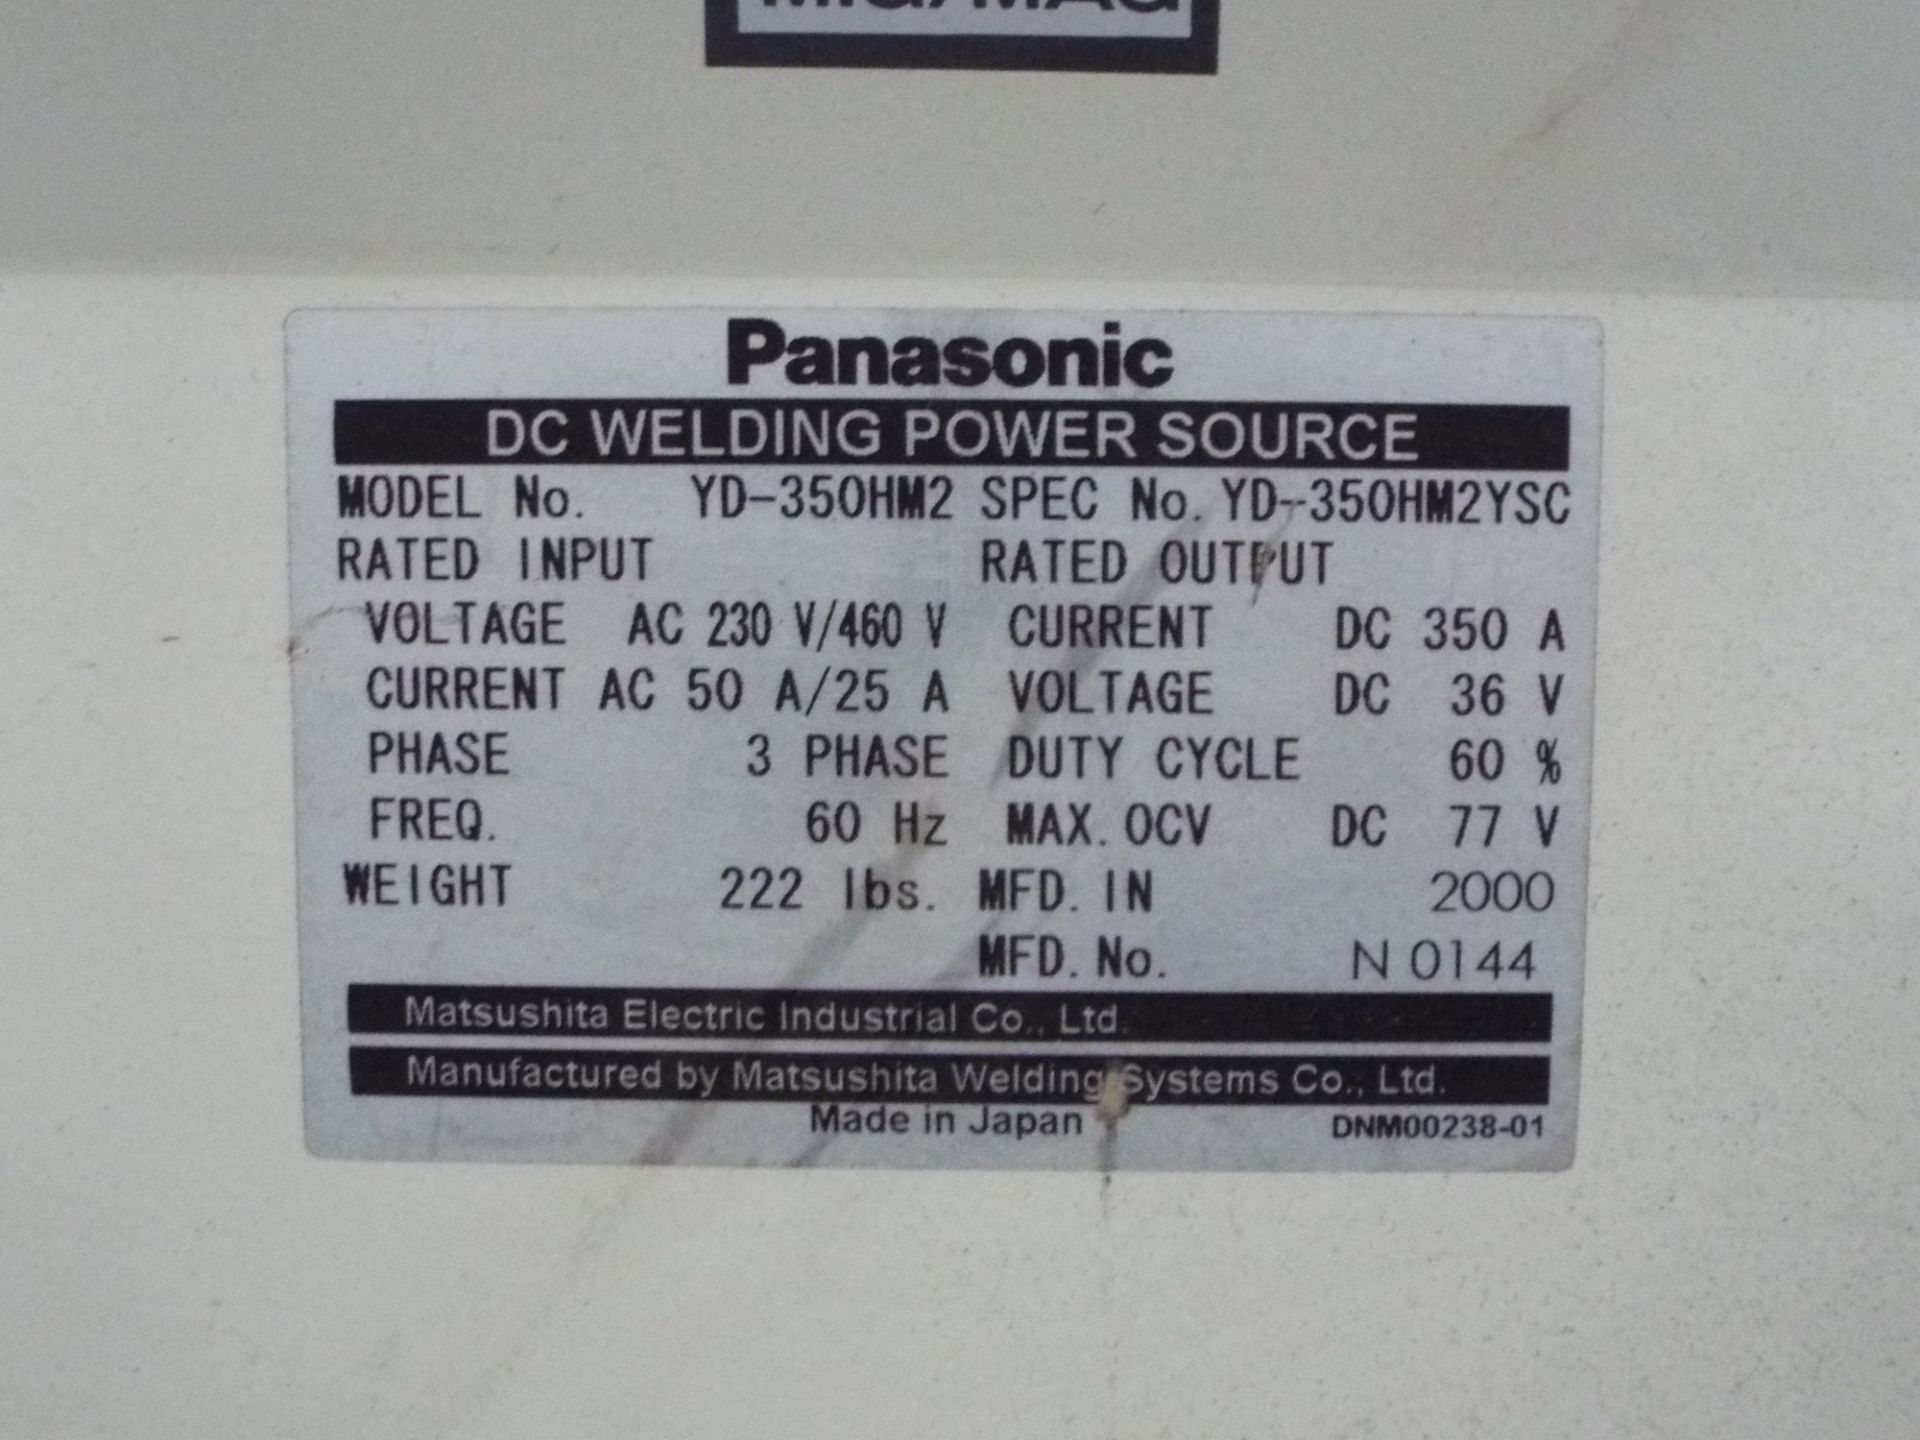 PANASONIC (2000) YD-350HM2 DIP PULSE DC WELDING POWER SOURCE, S/N: YD-350HM2YSC - Image 3 of 3